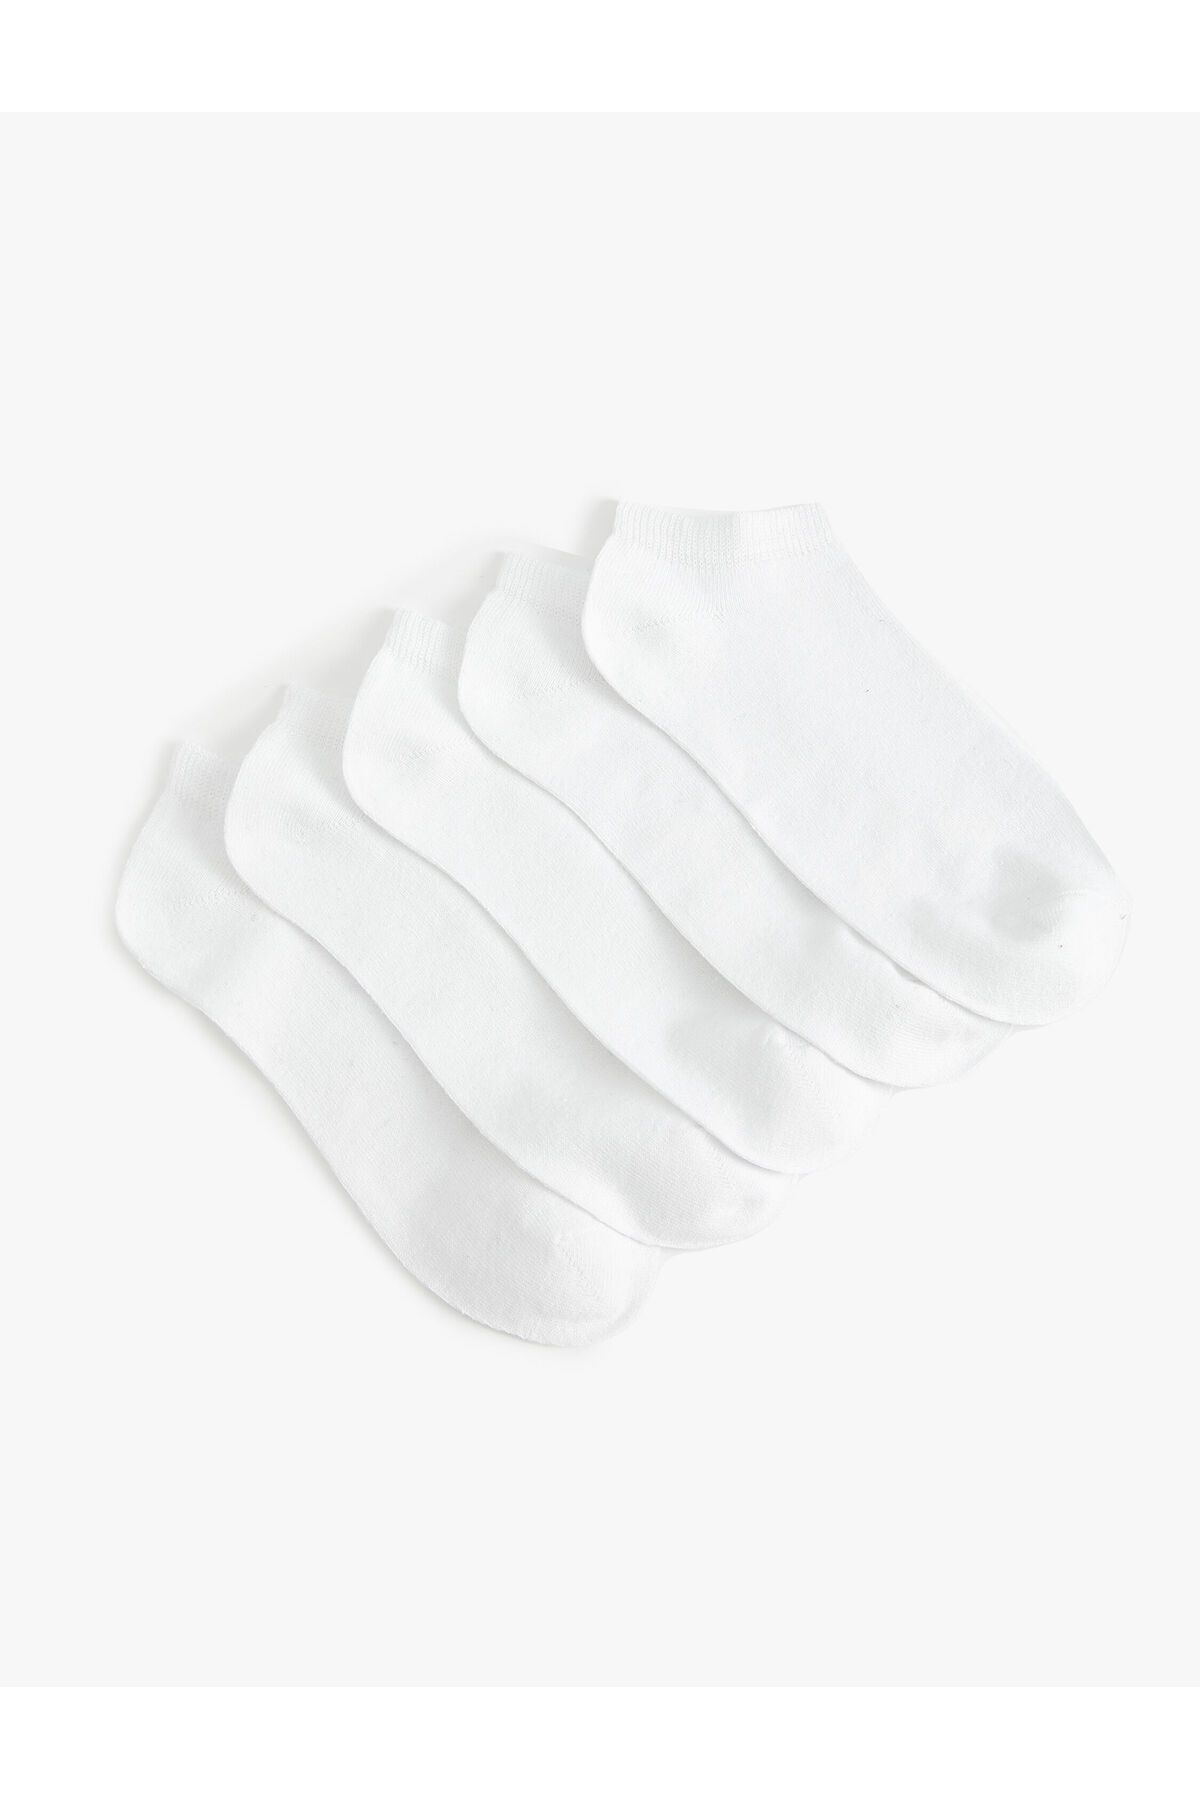 Koton Basic 5'li Patik Çorap Seti